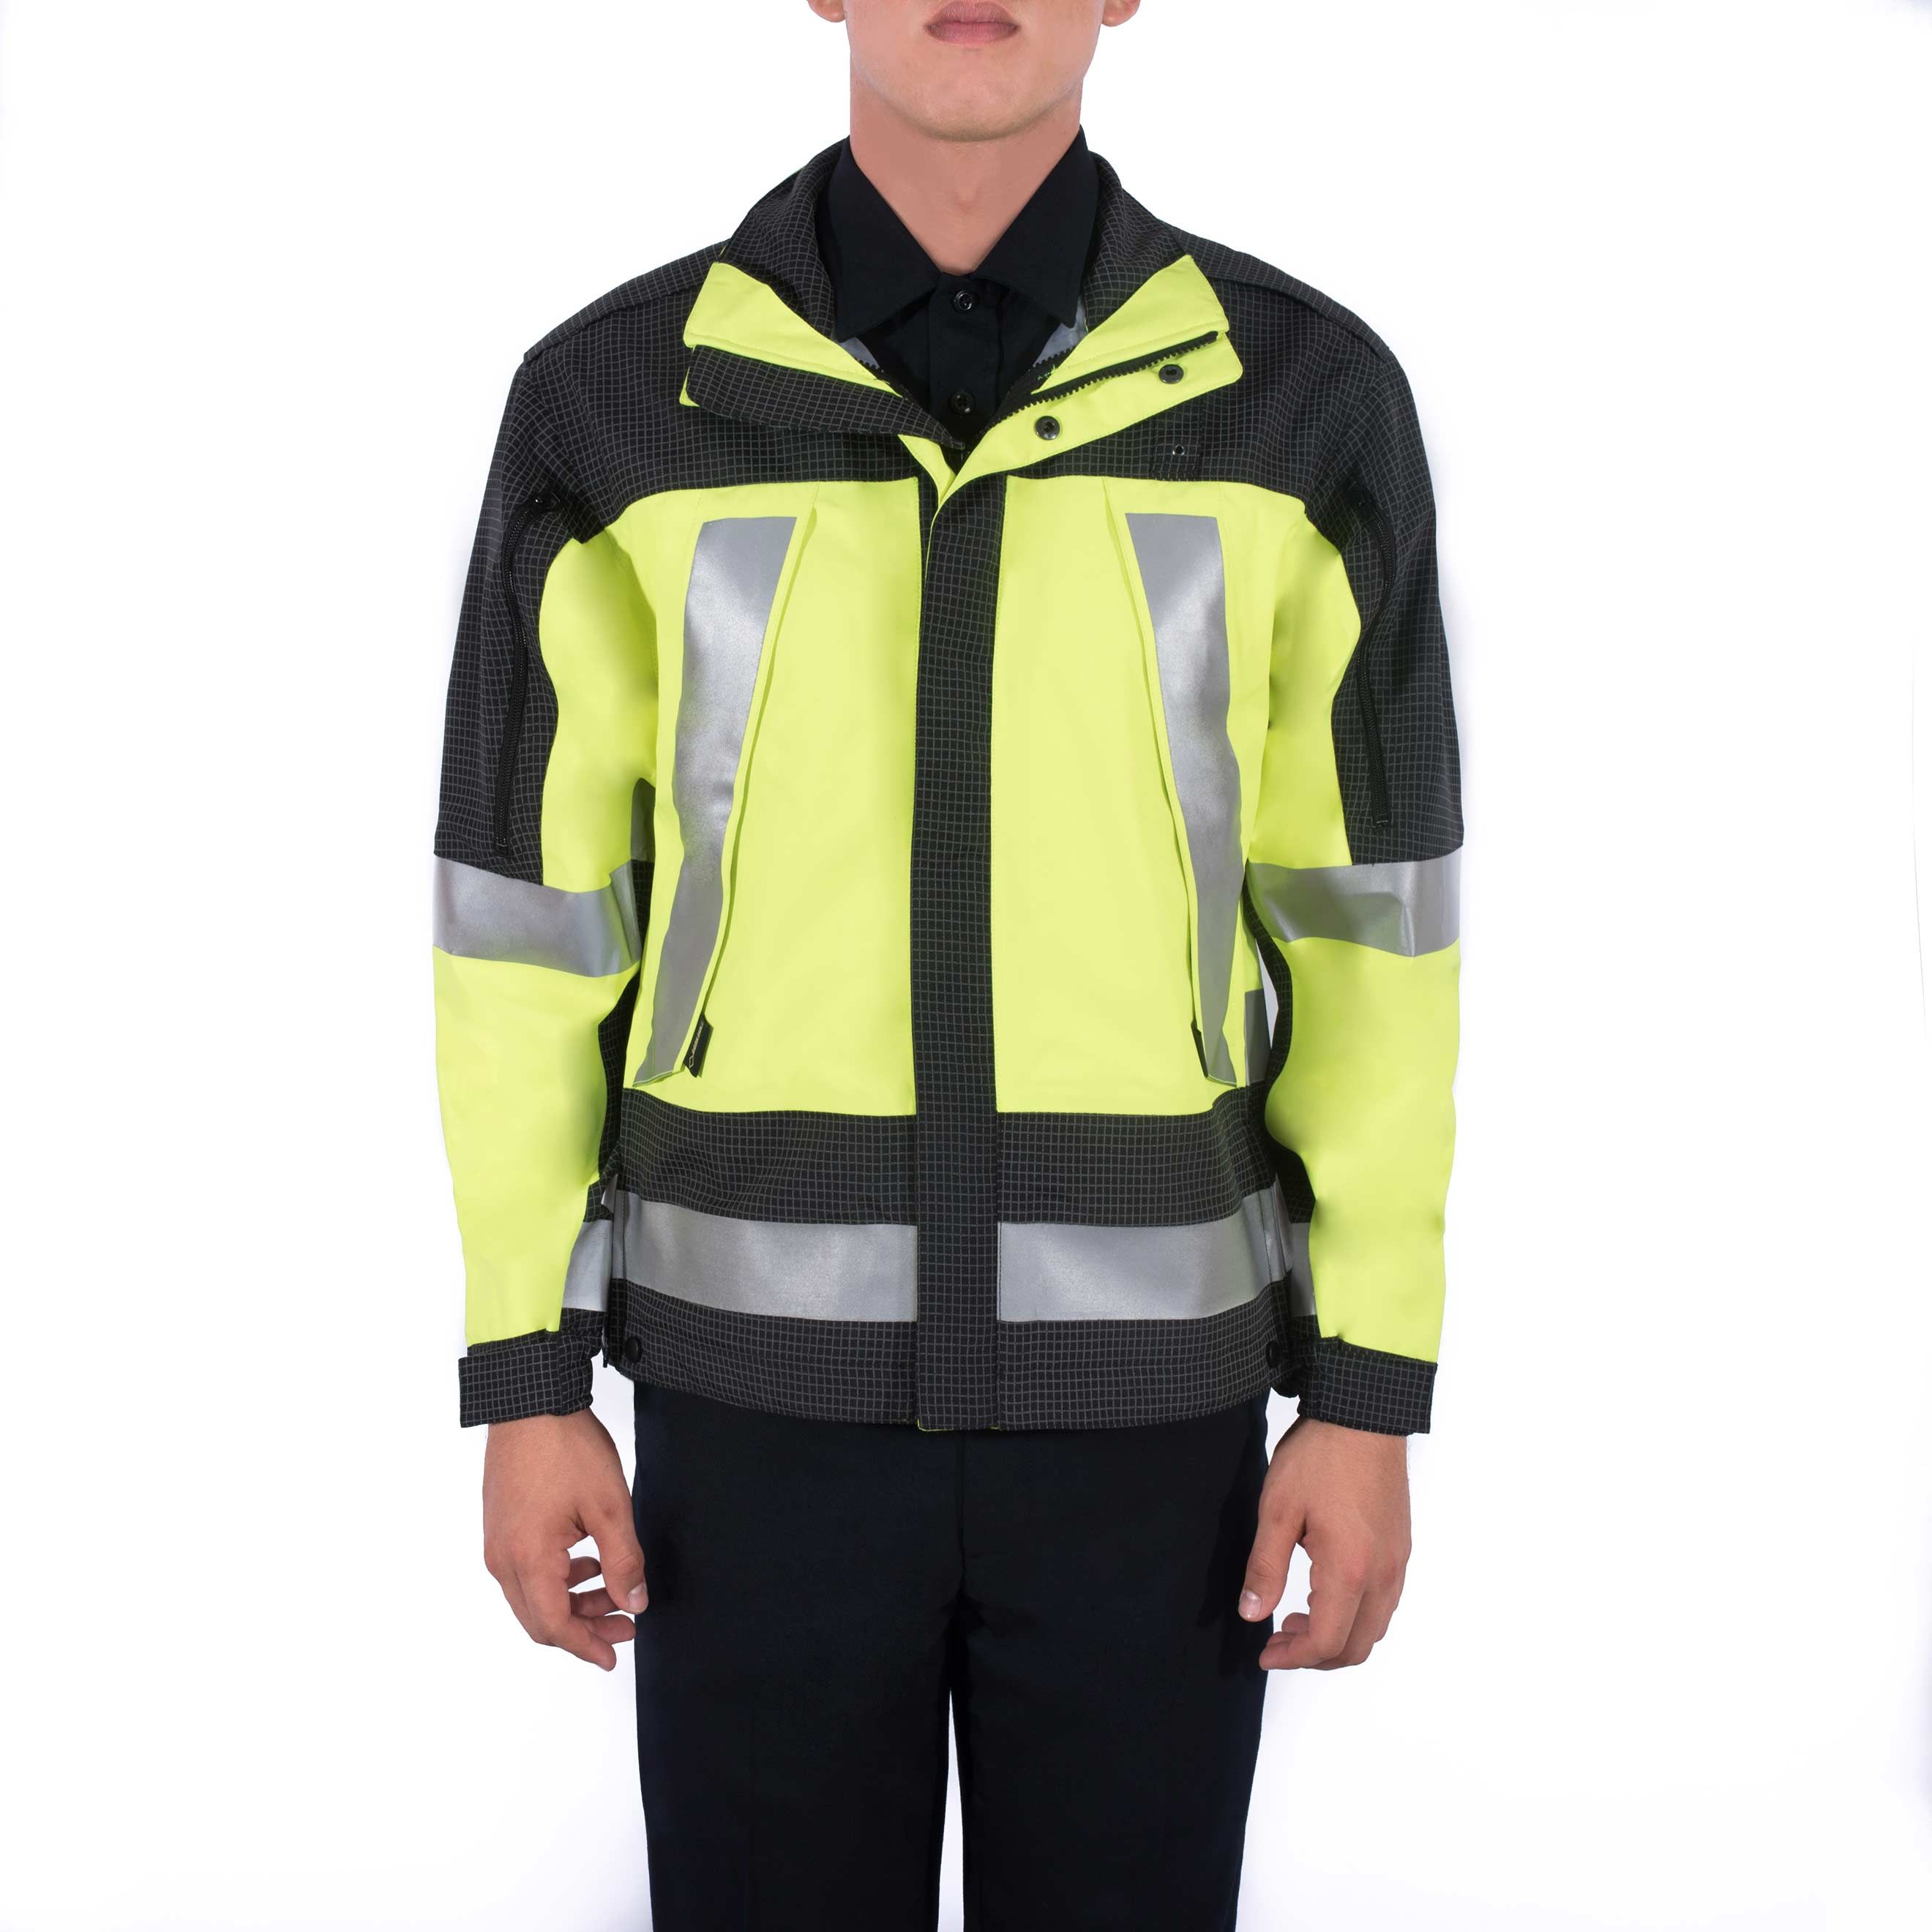 illumiNITE Men's Reflective Navy EMS Storm Jacket Workwear